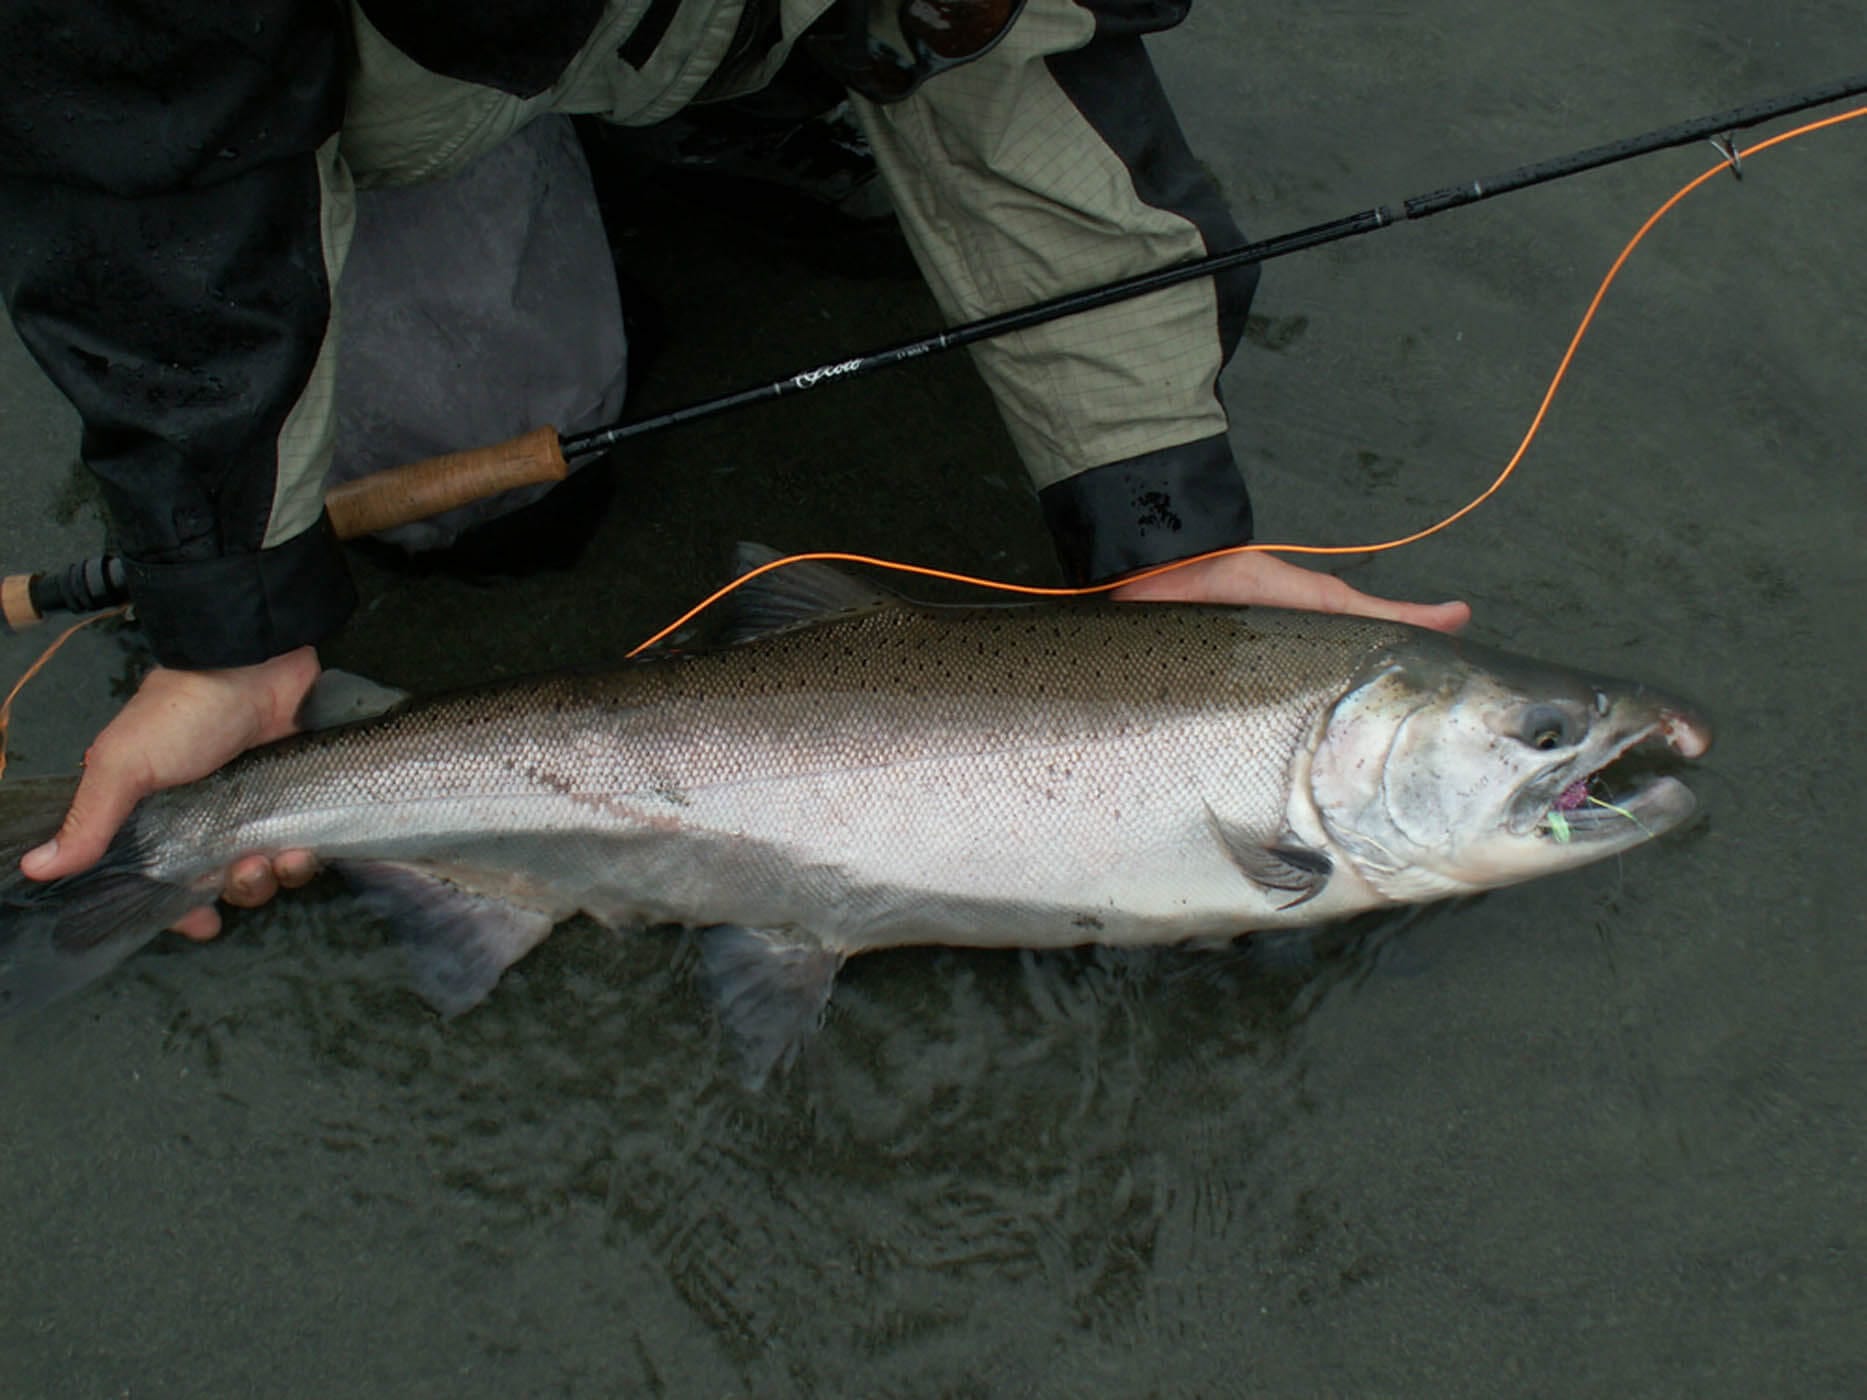 Fisherman holding salmon at water level.